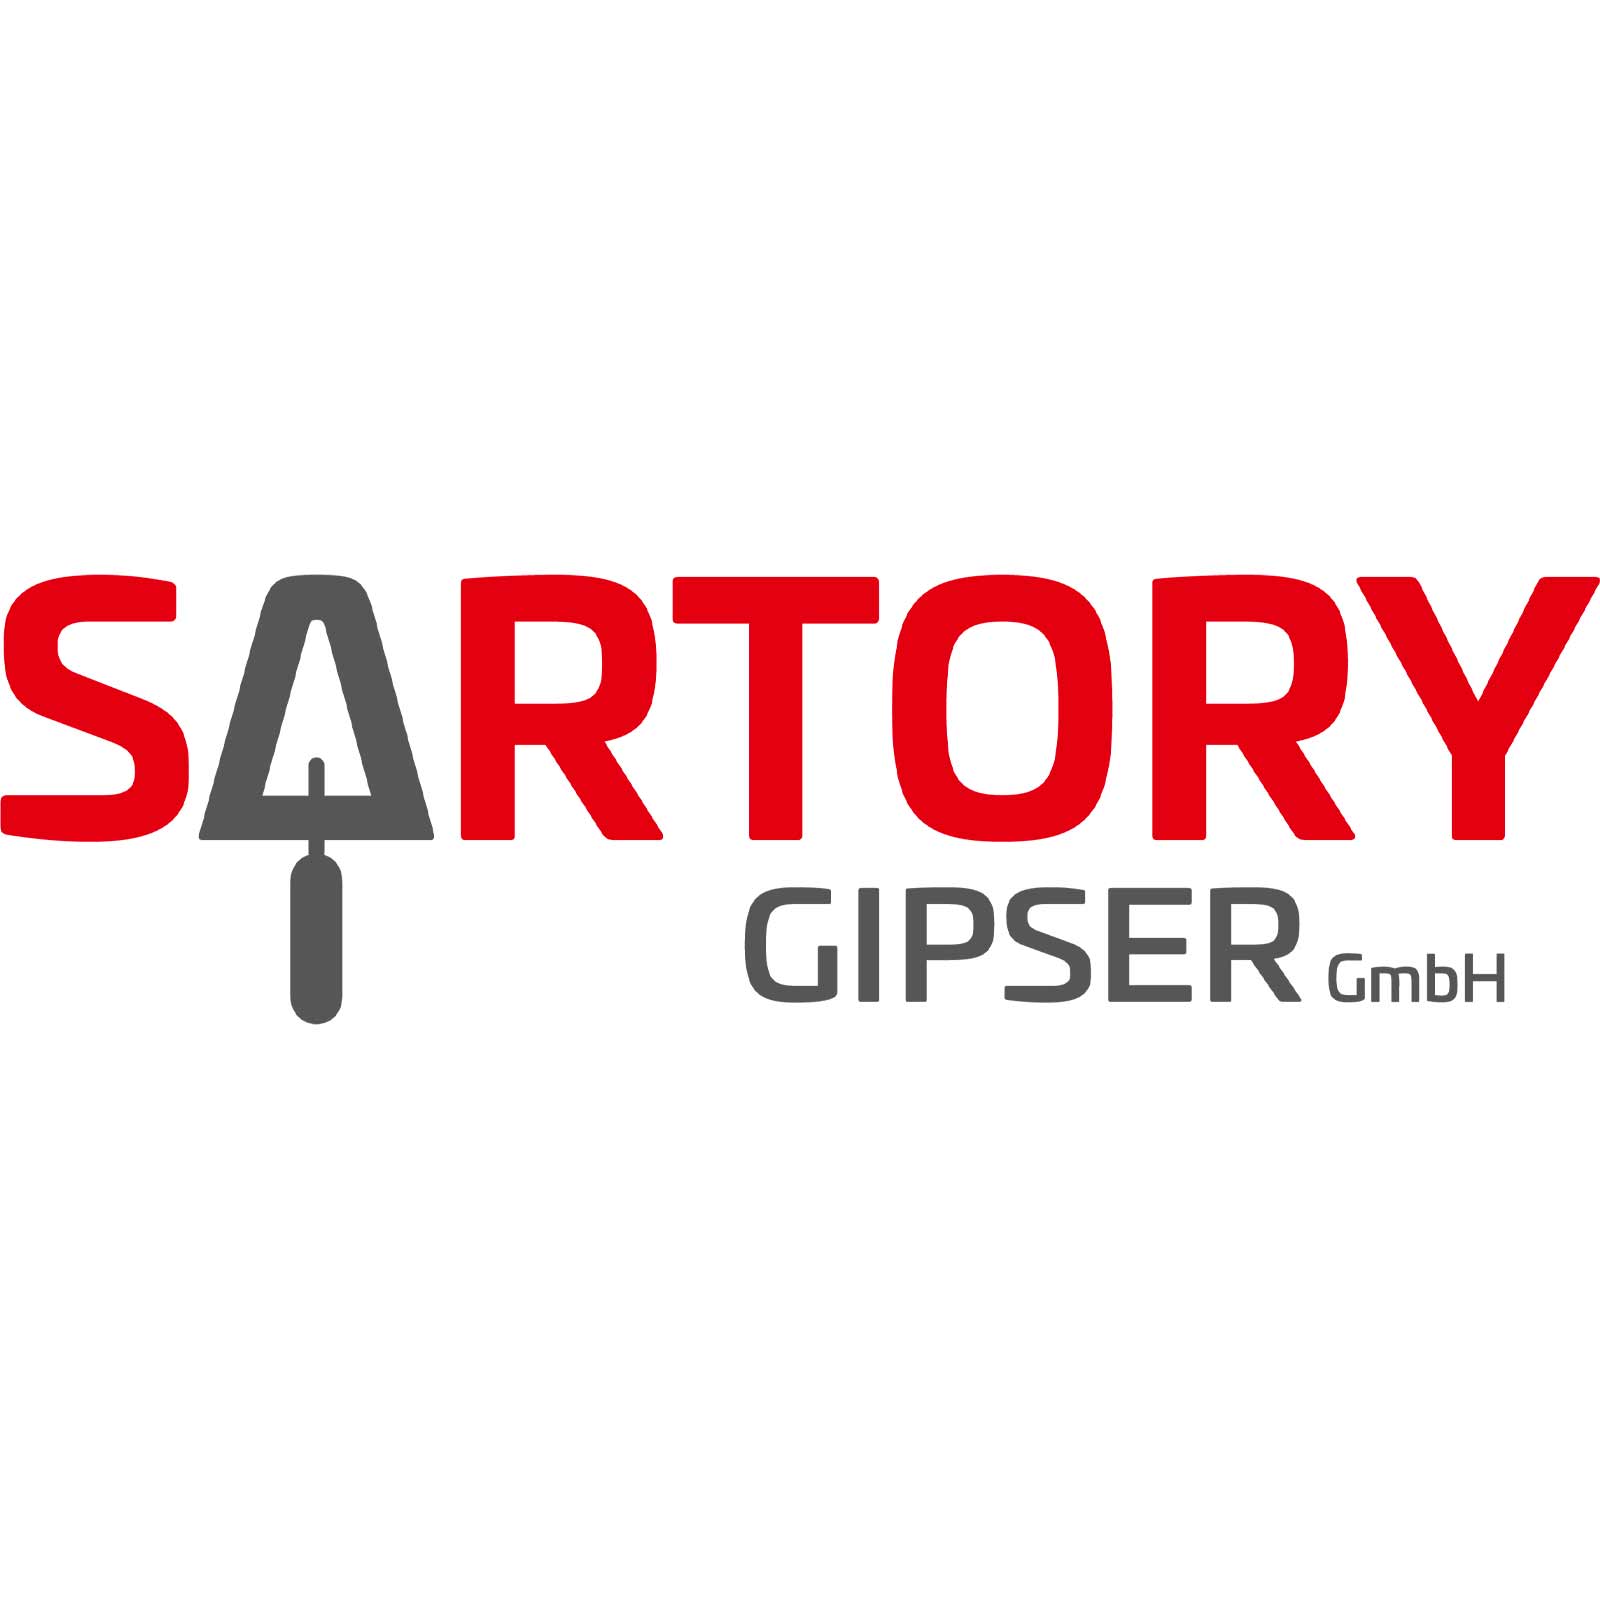 Sartory Gipser GmbH Corporate Design Realisierungen, SEO, Graphic-Design, Fotografie, Foto-Retouching und Digital Photo-Composing ShowMyProject 